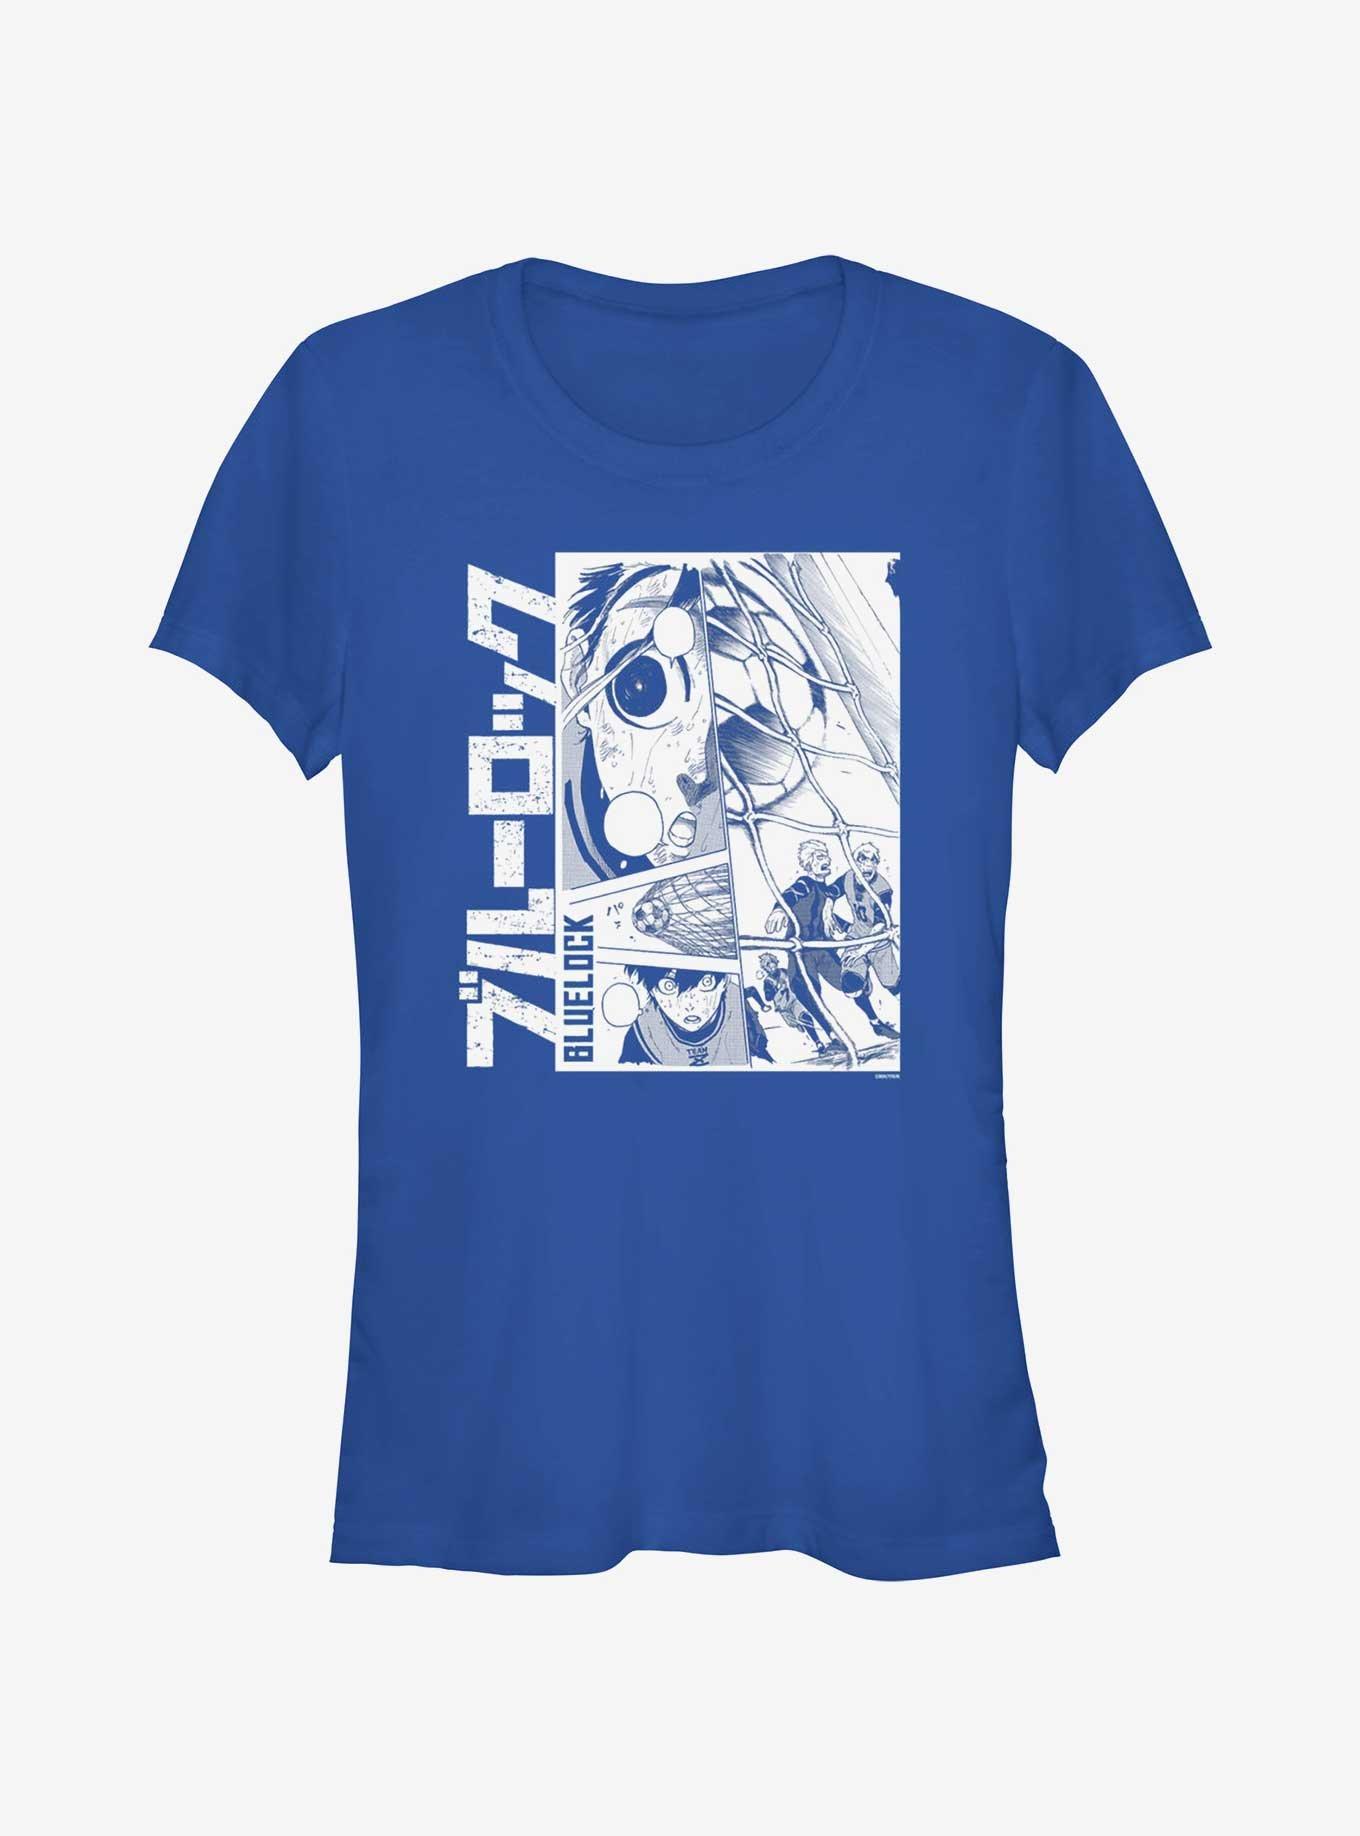 Blue Lock Yoichi Isagi Forward Kick Poster Girls T-Shirt, ROYAL, hi-res